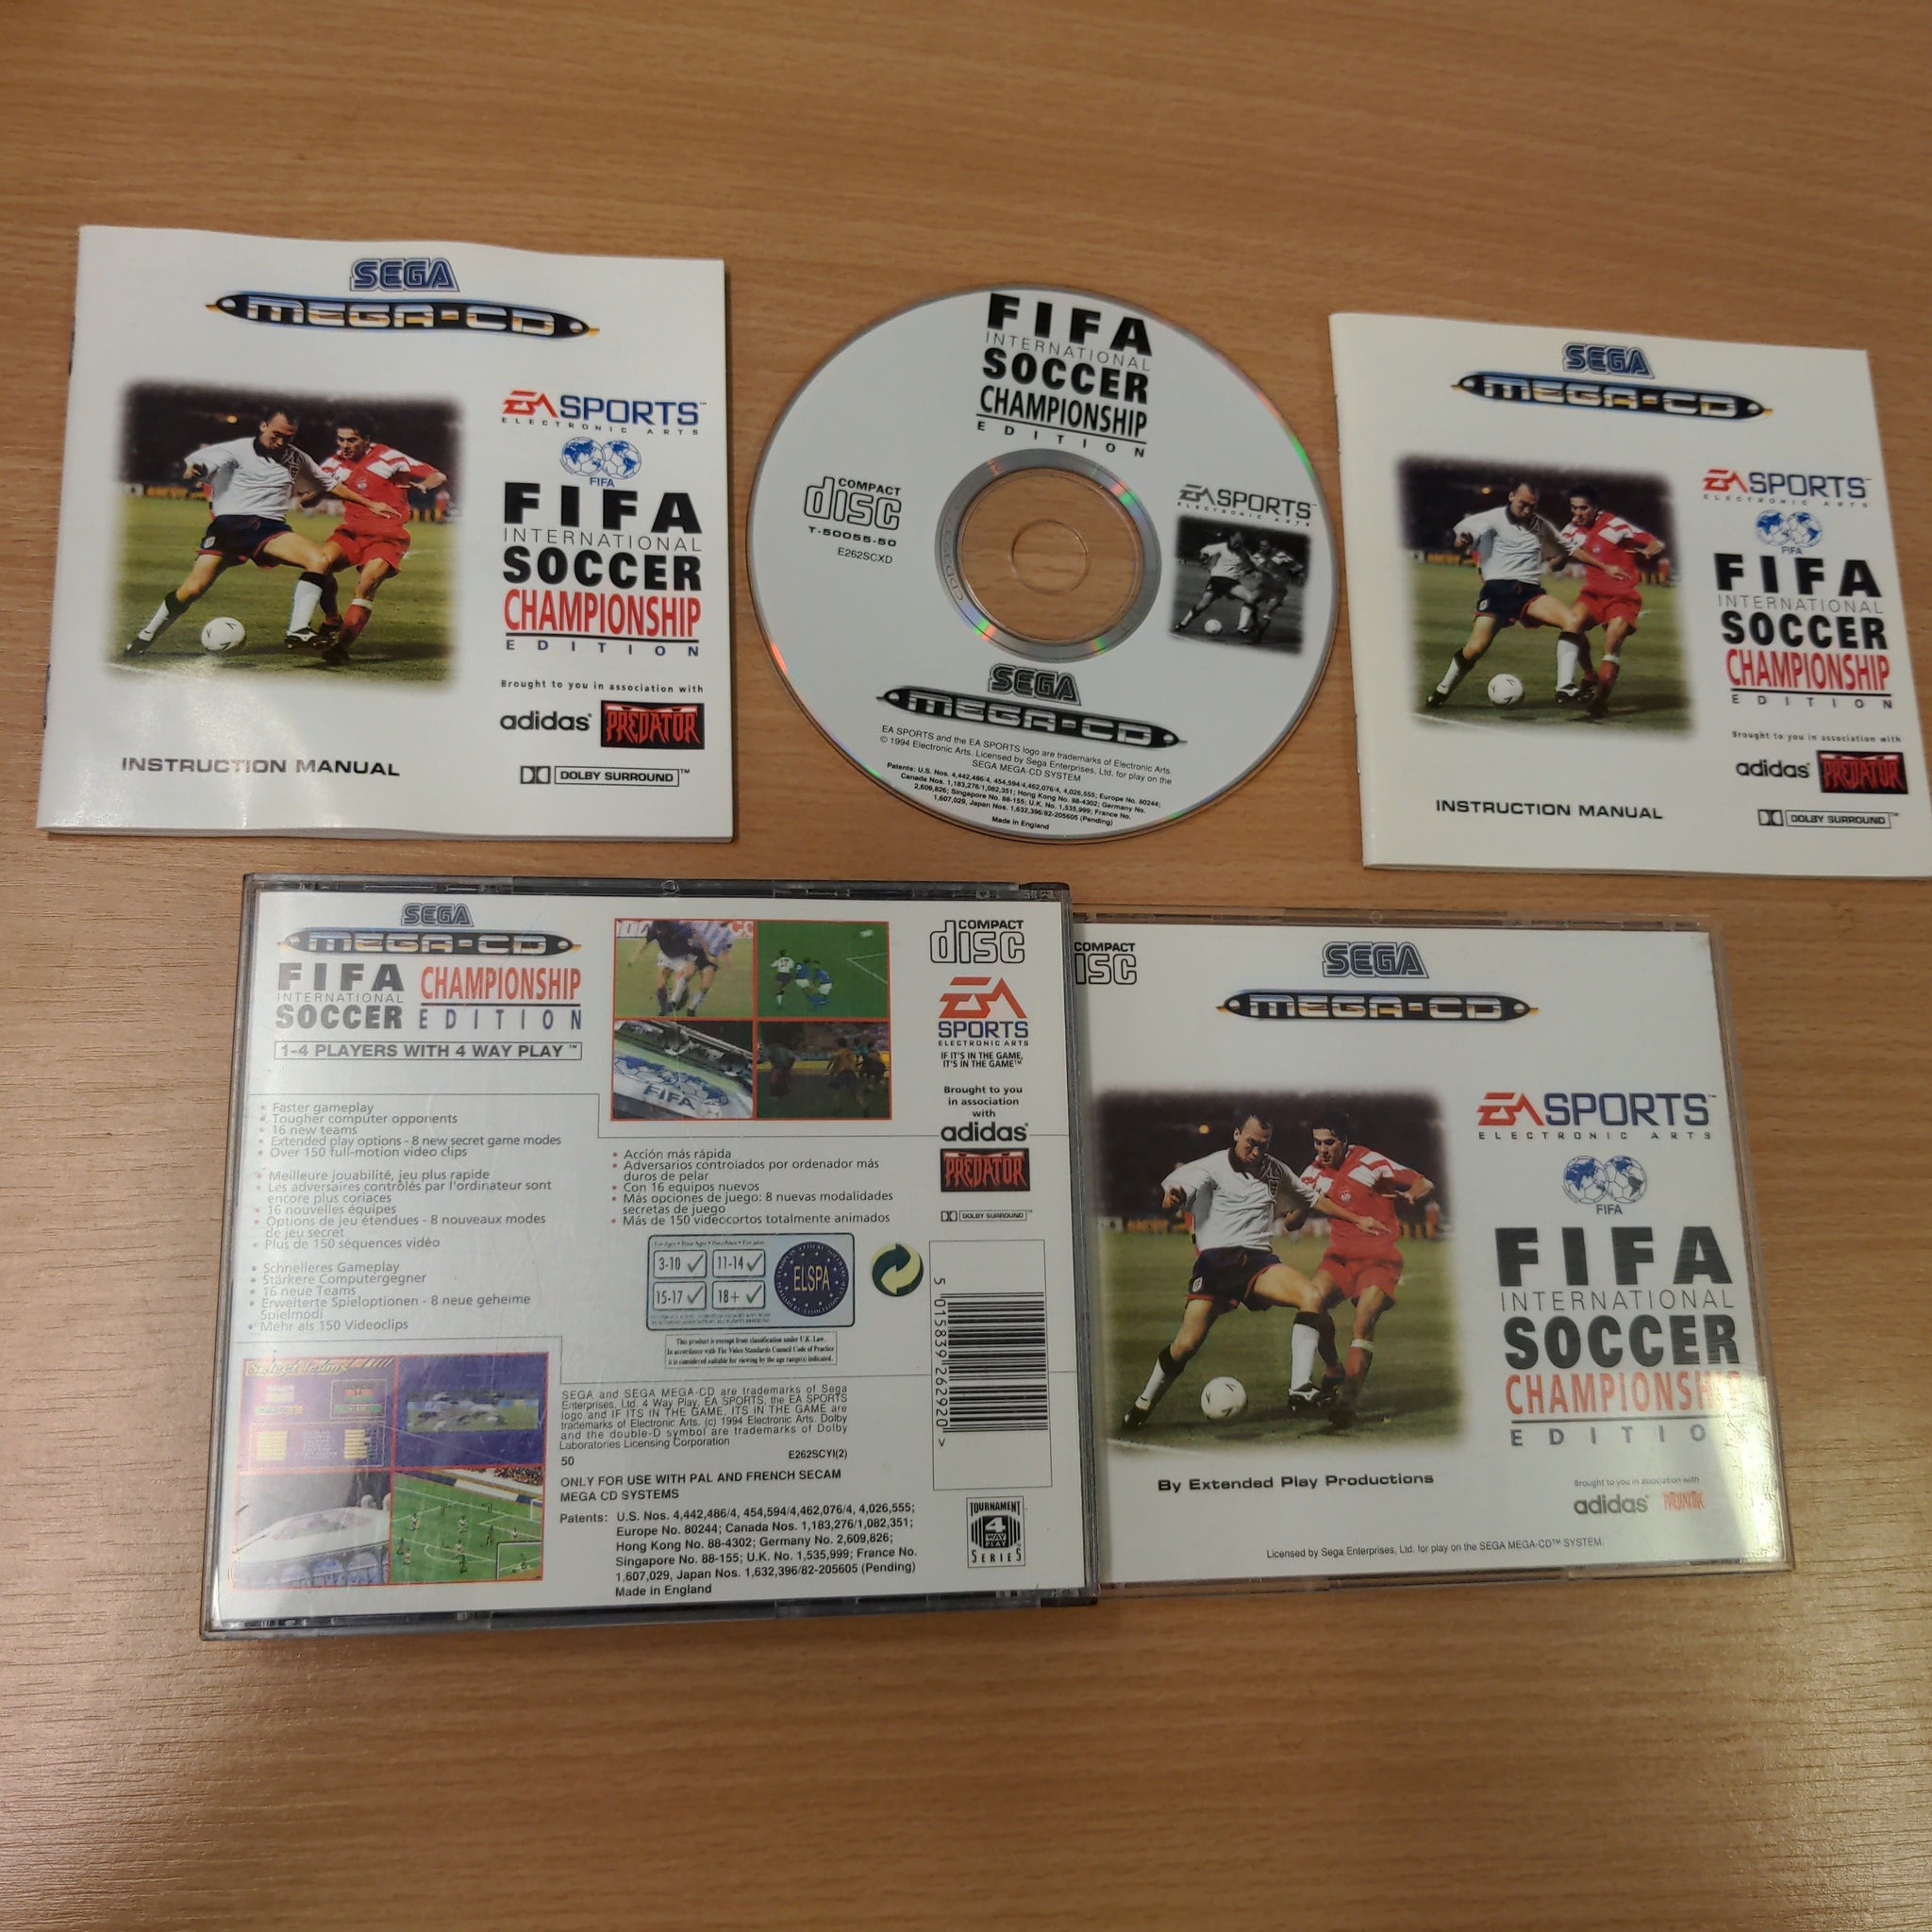 Fifa International Soccer Championship Sega Mega-CD game